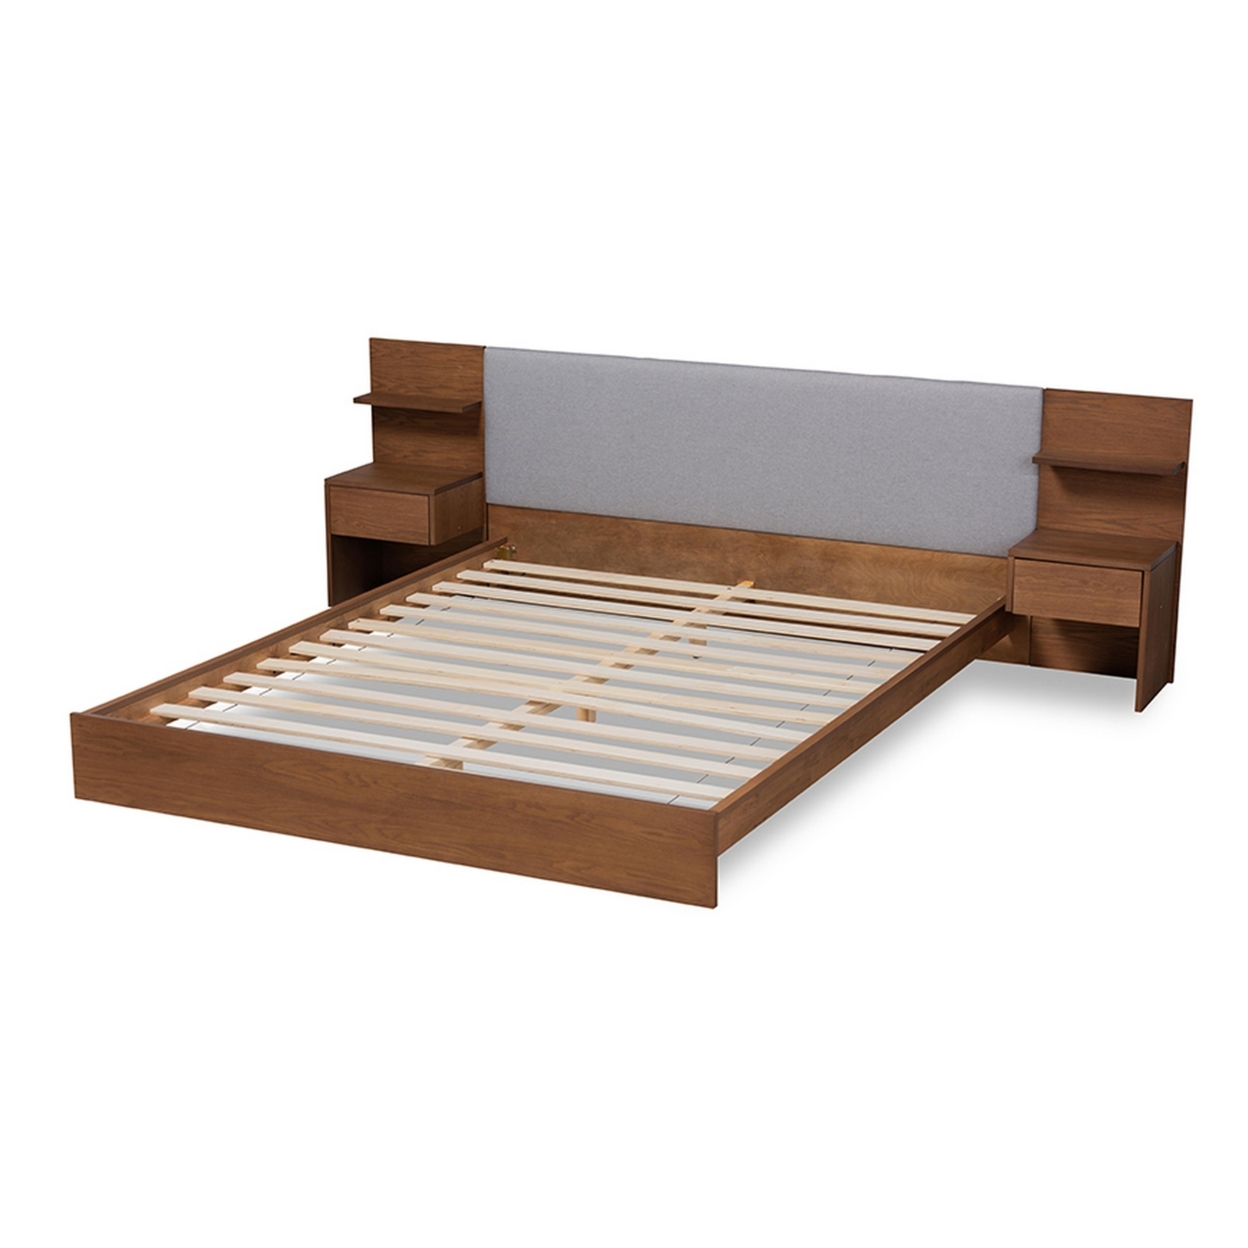 Sami Wood Queen Size Platform Storage Bed with Built-In Nightstands - image 4 of 5